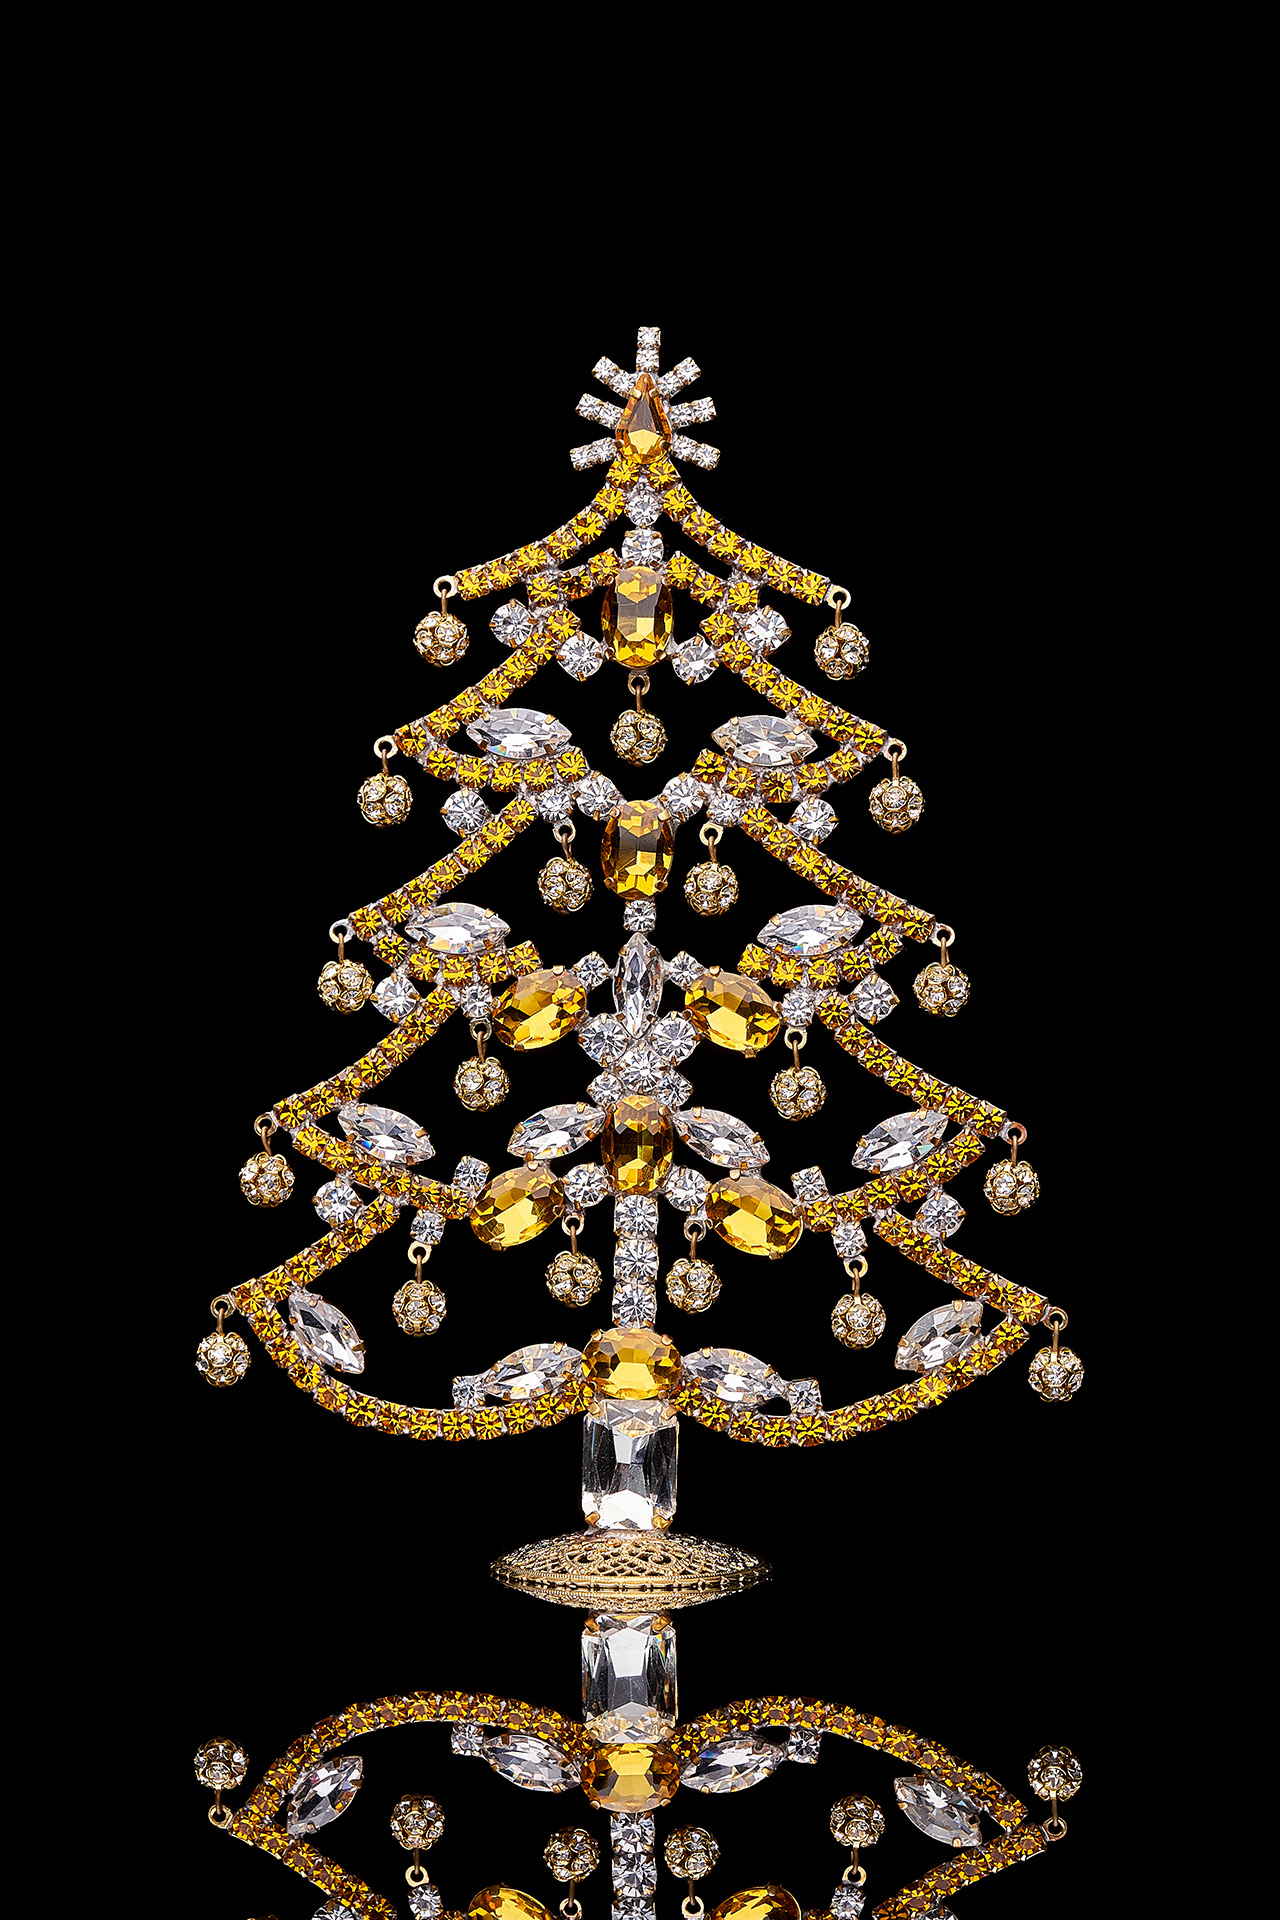 Crystalline Christmas tree decorated from yellow rhinestones